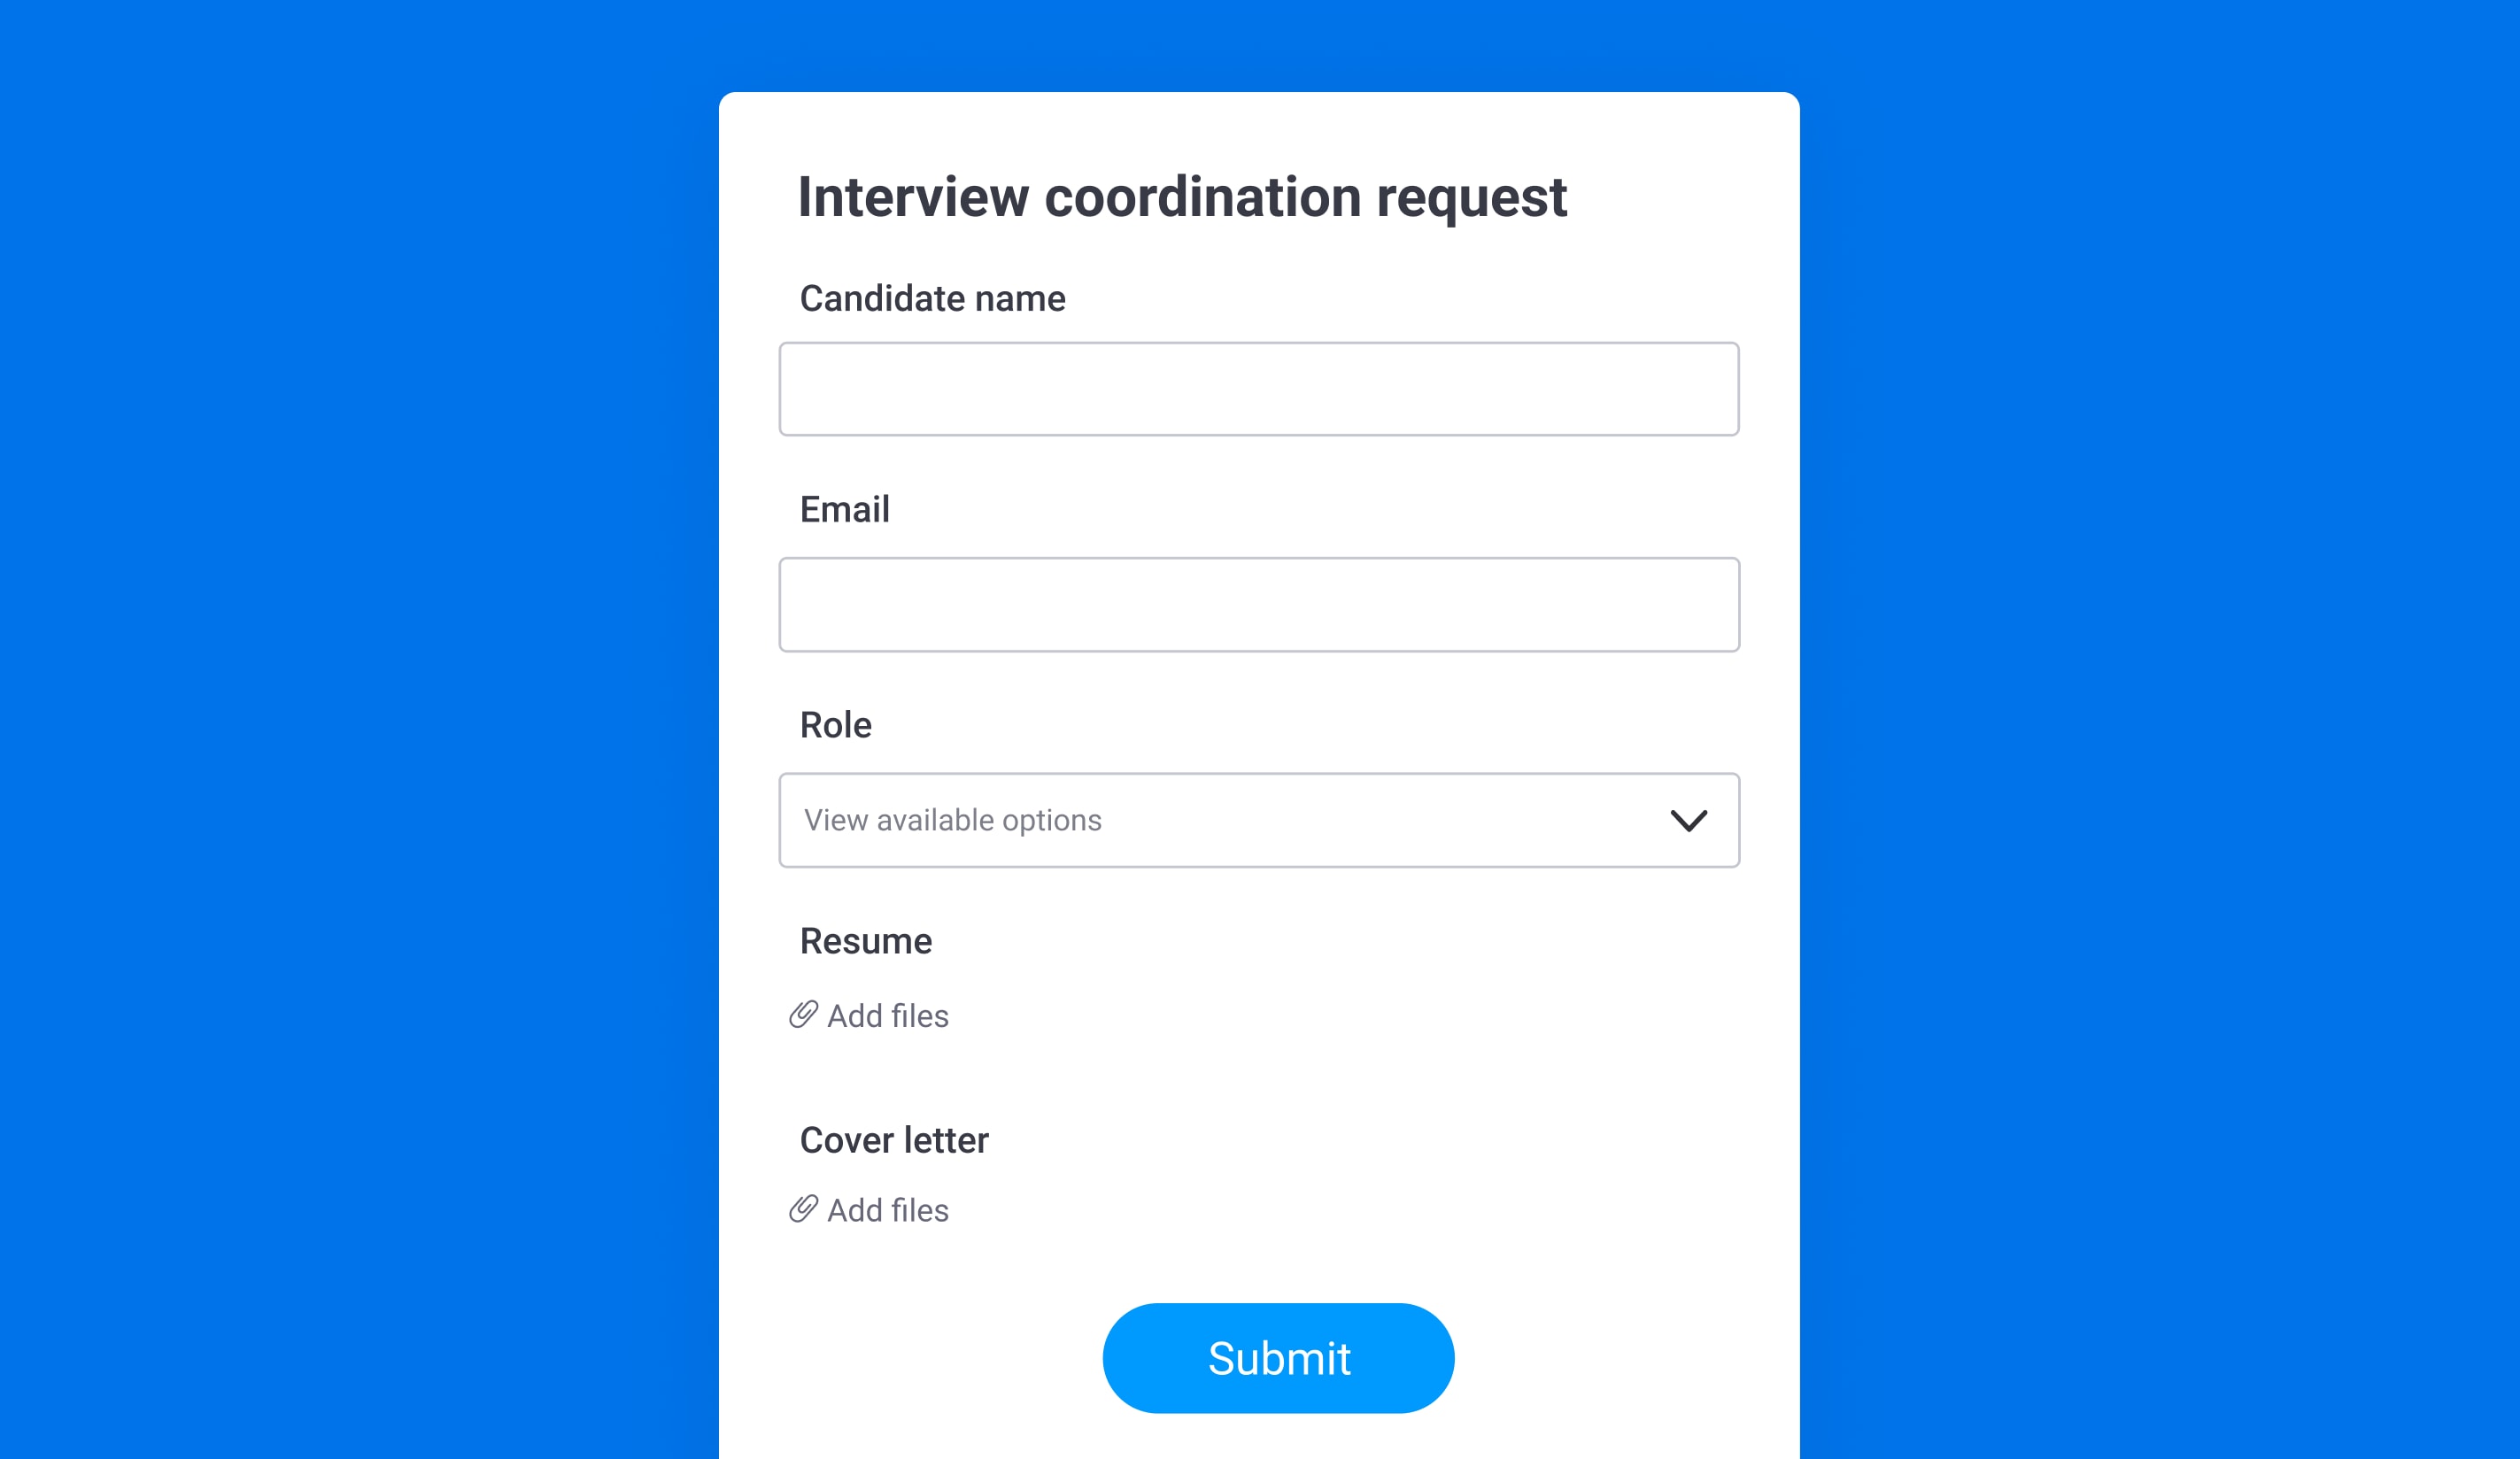 Interview coordination request